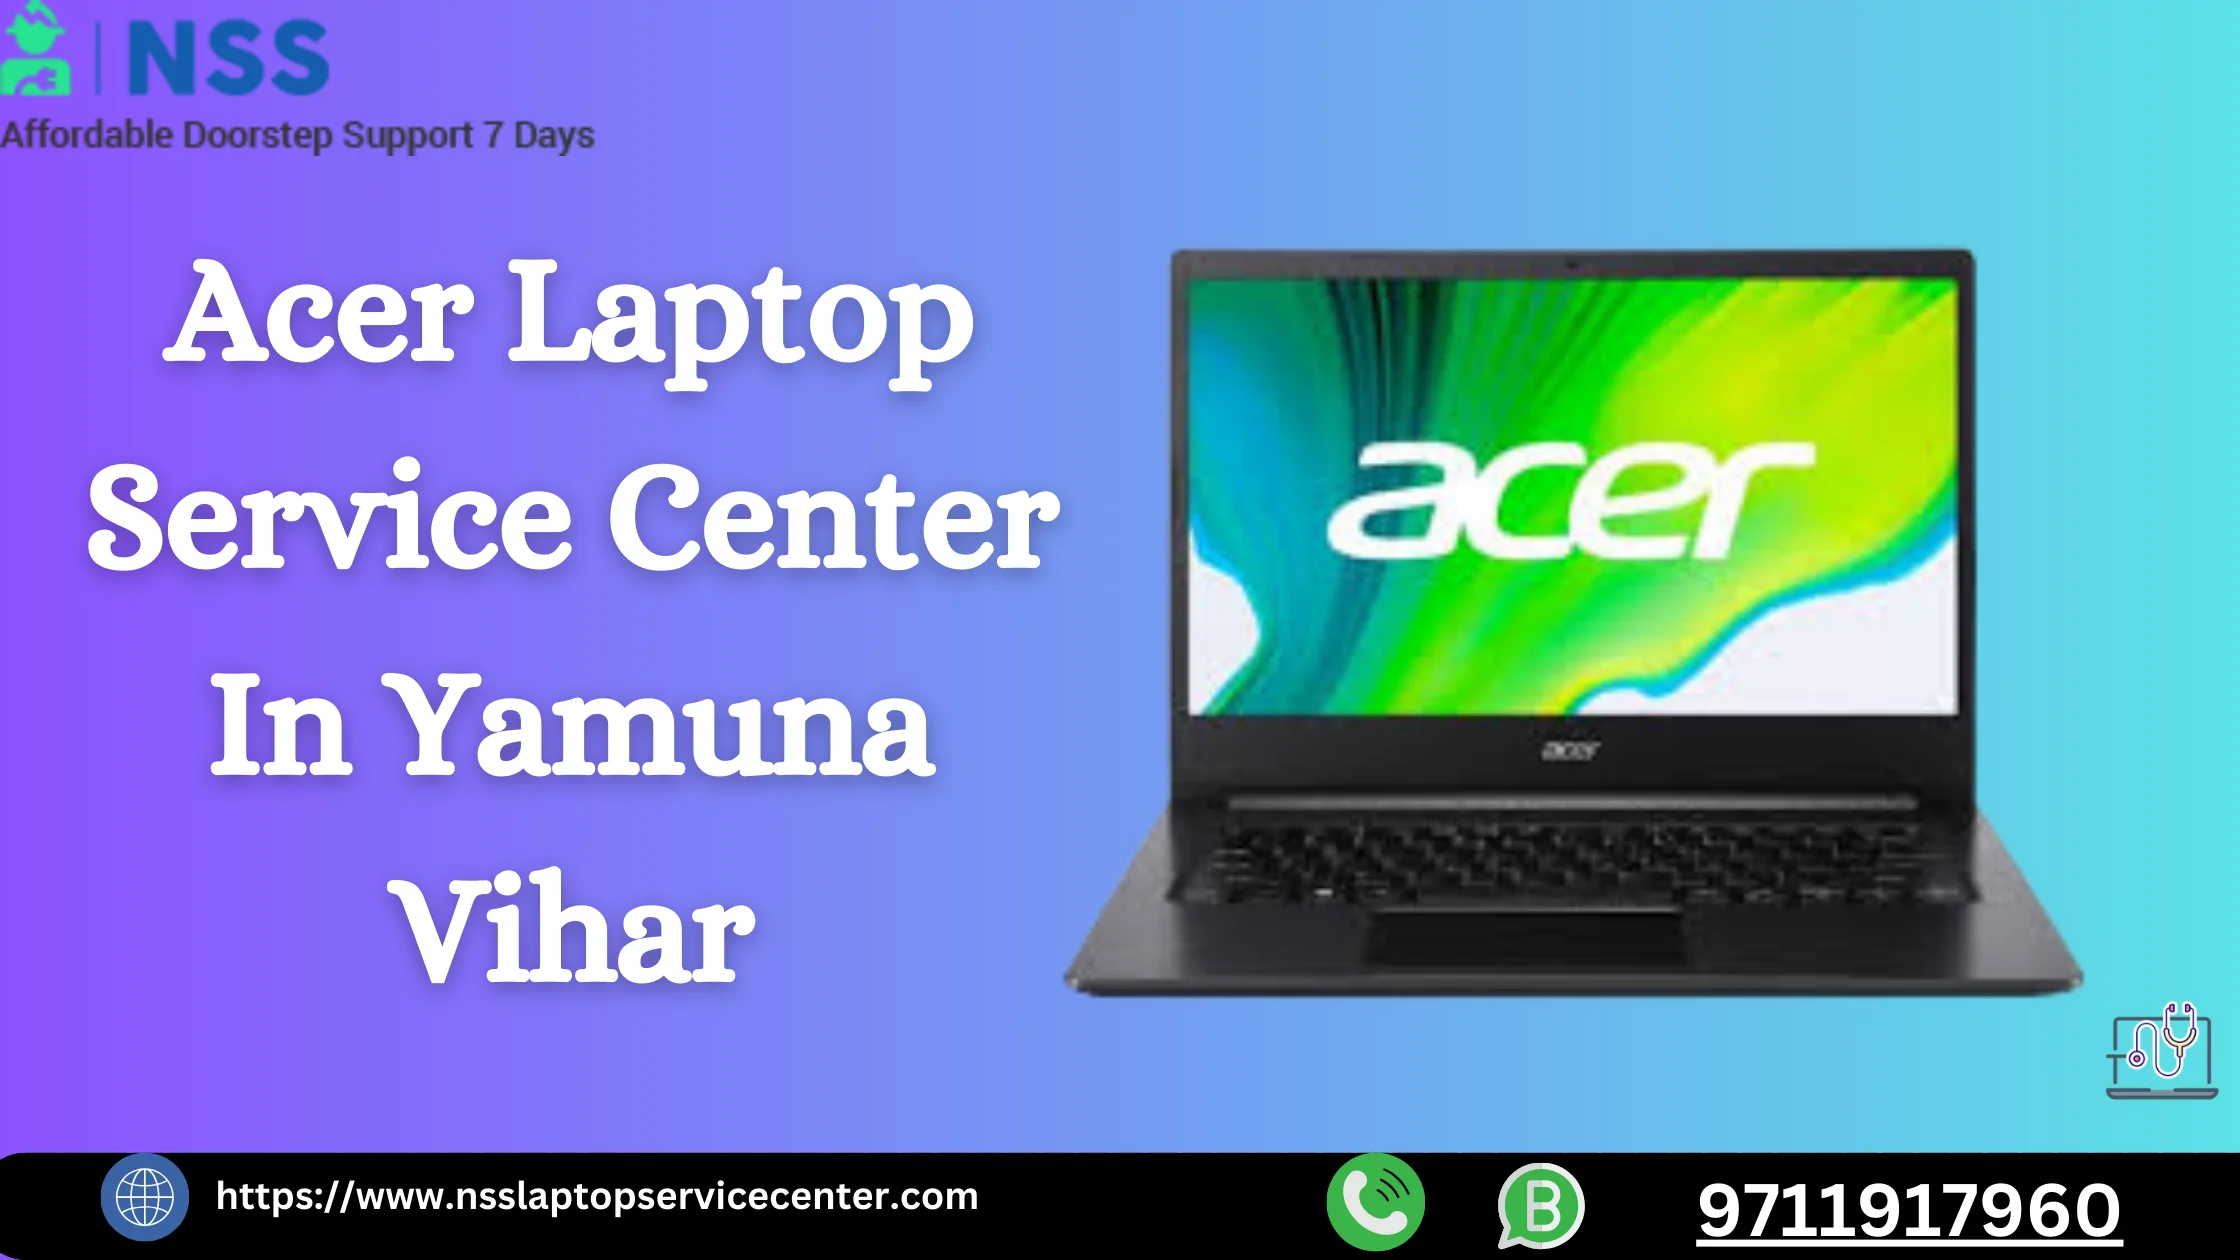 Acer Laptop Service Center in Yamuna Vihar, Delhi